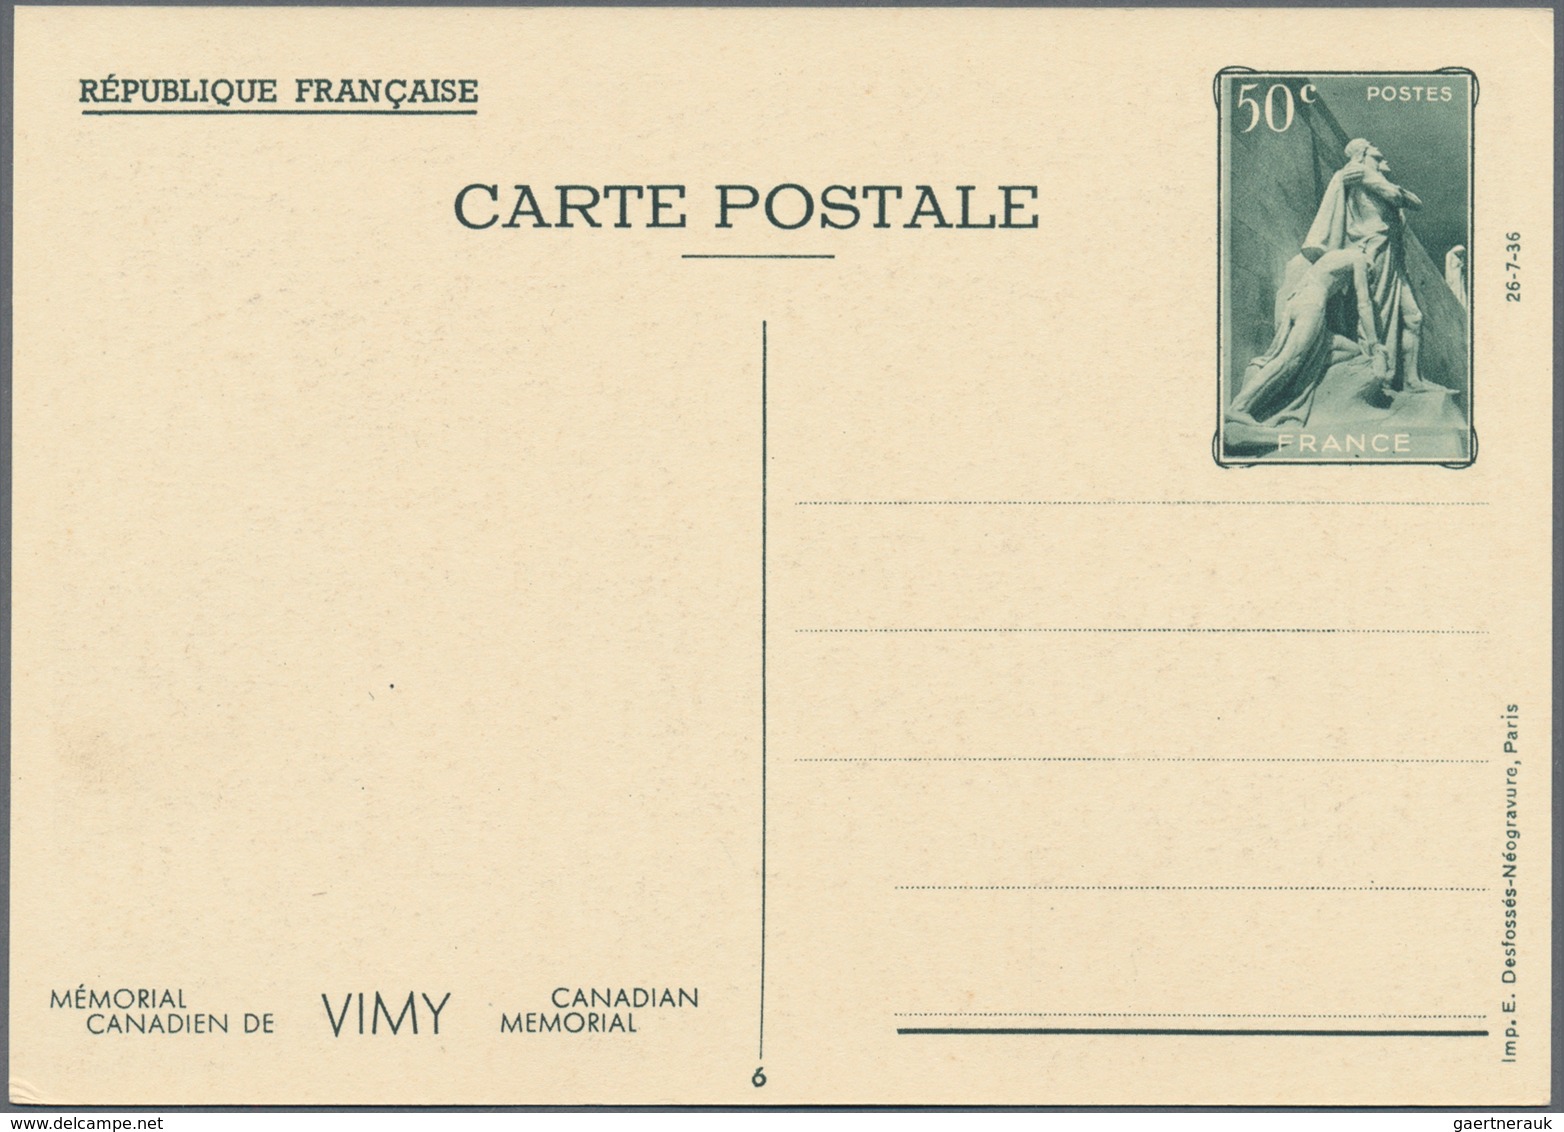 Frankreich - Ganzsachen: 1938, 50 C Vimy postal stationery picture postcards, complete set of 10 ite